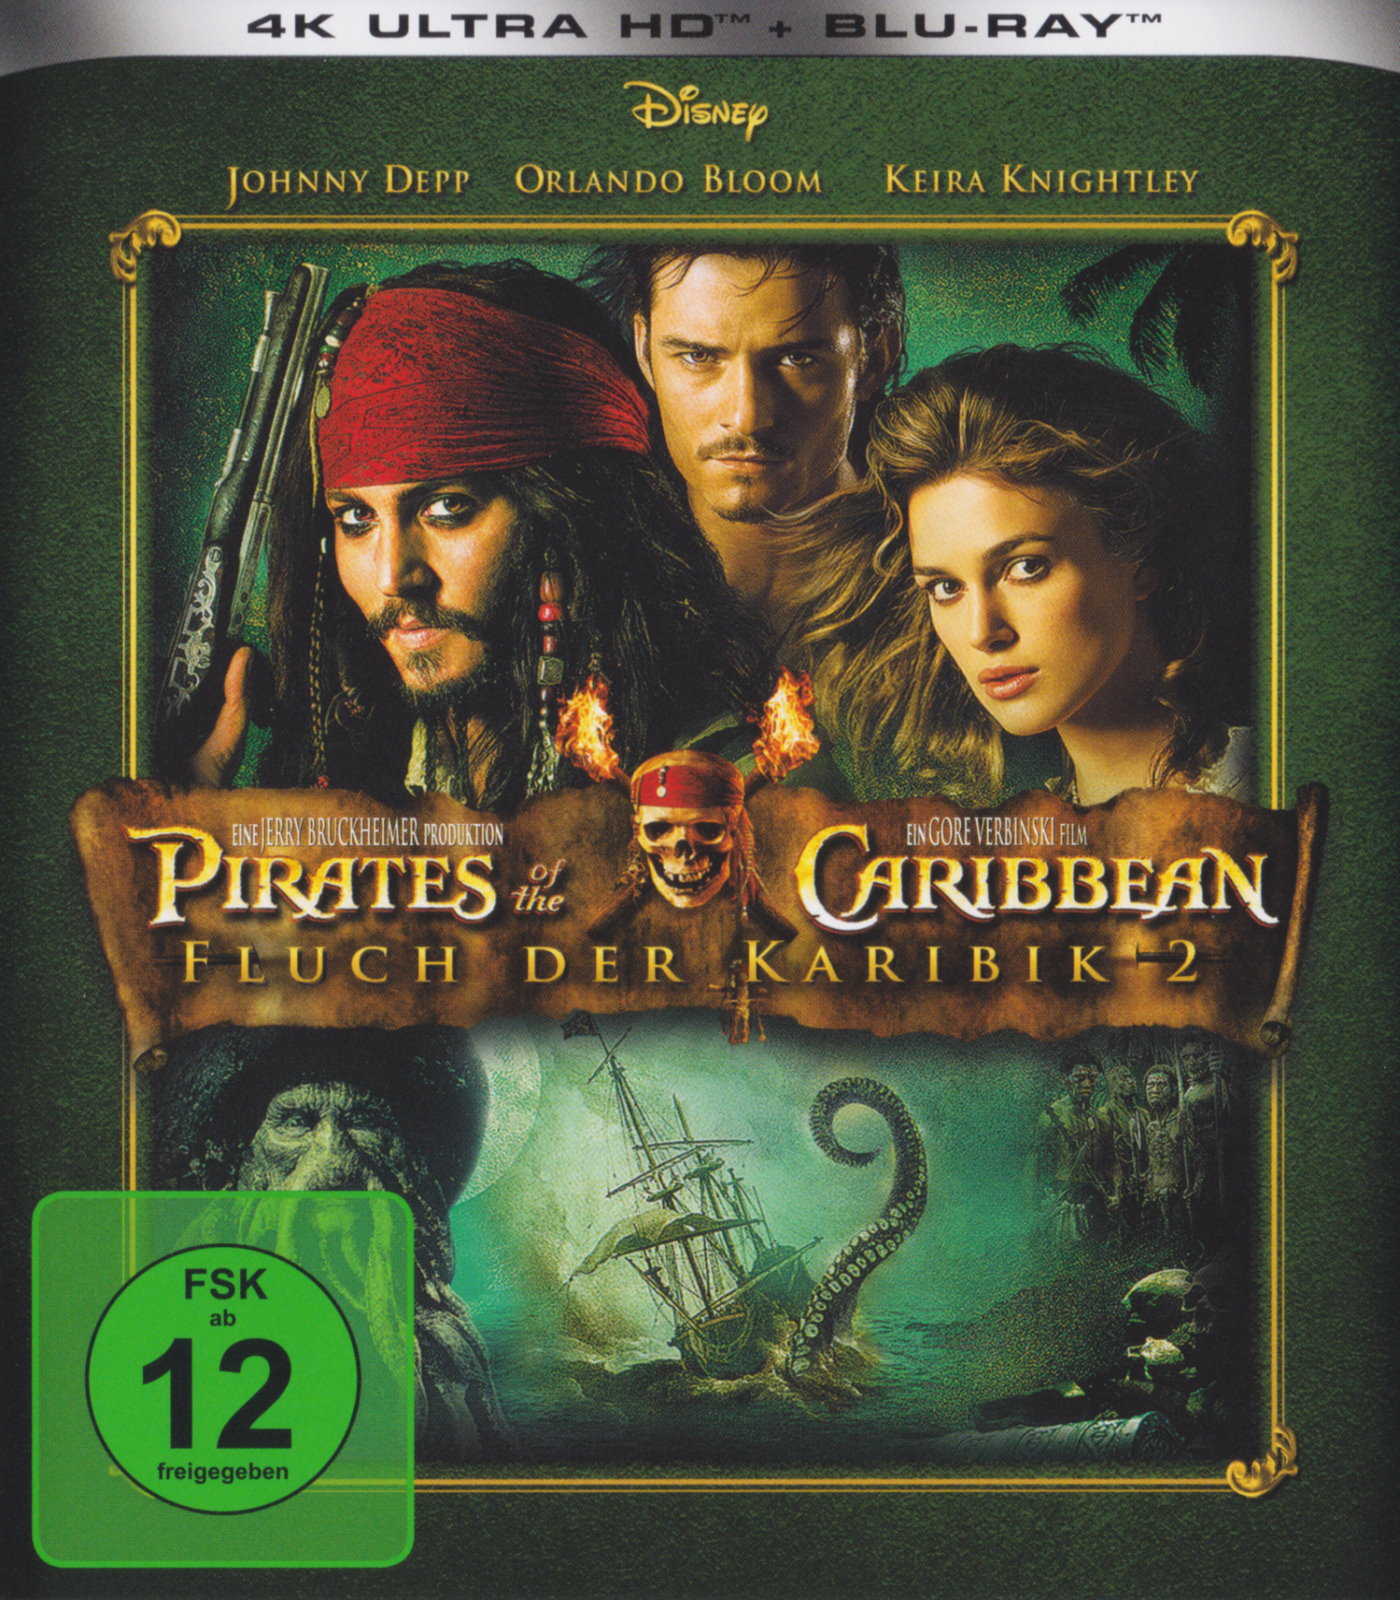 Cover - Pirates of the Caribbean - Fluch der Karibik 2.jpg